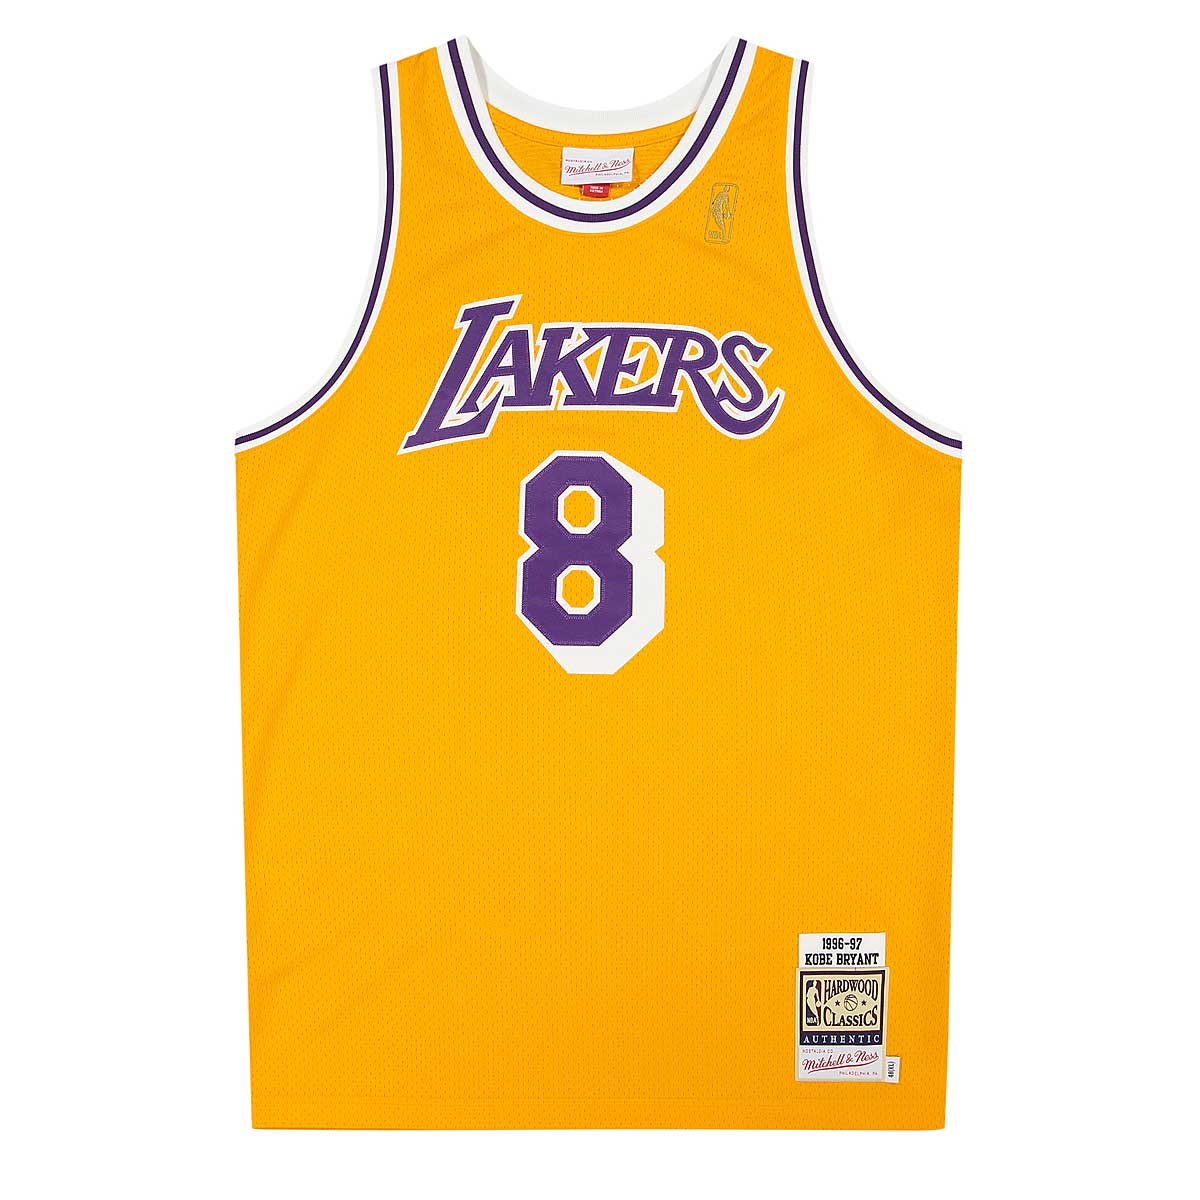 Los Angeles Lakers #8 Kobe Bryant NBA Basketball Jersey -S.M.L.